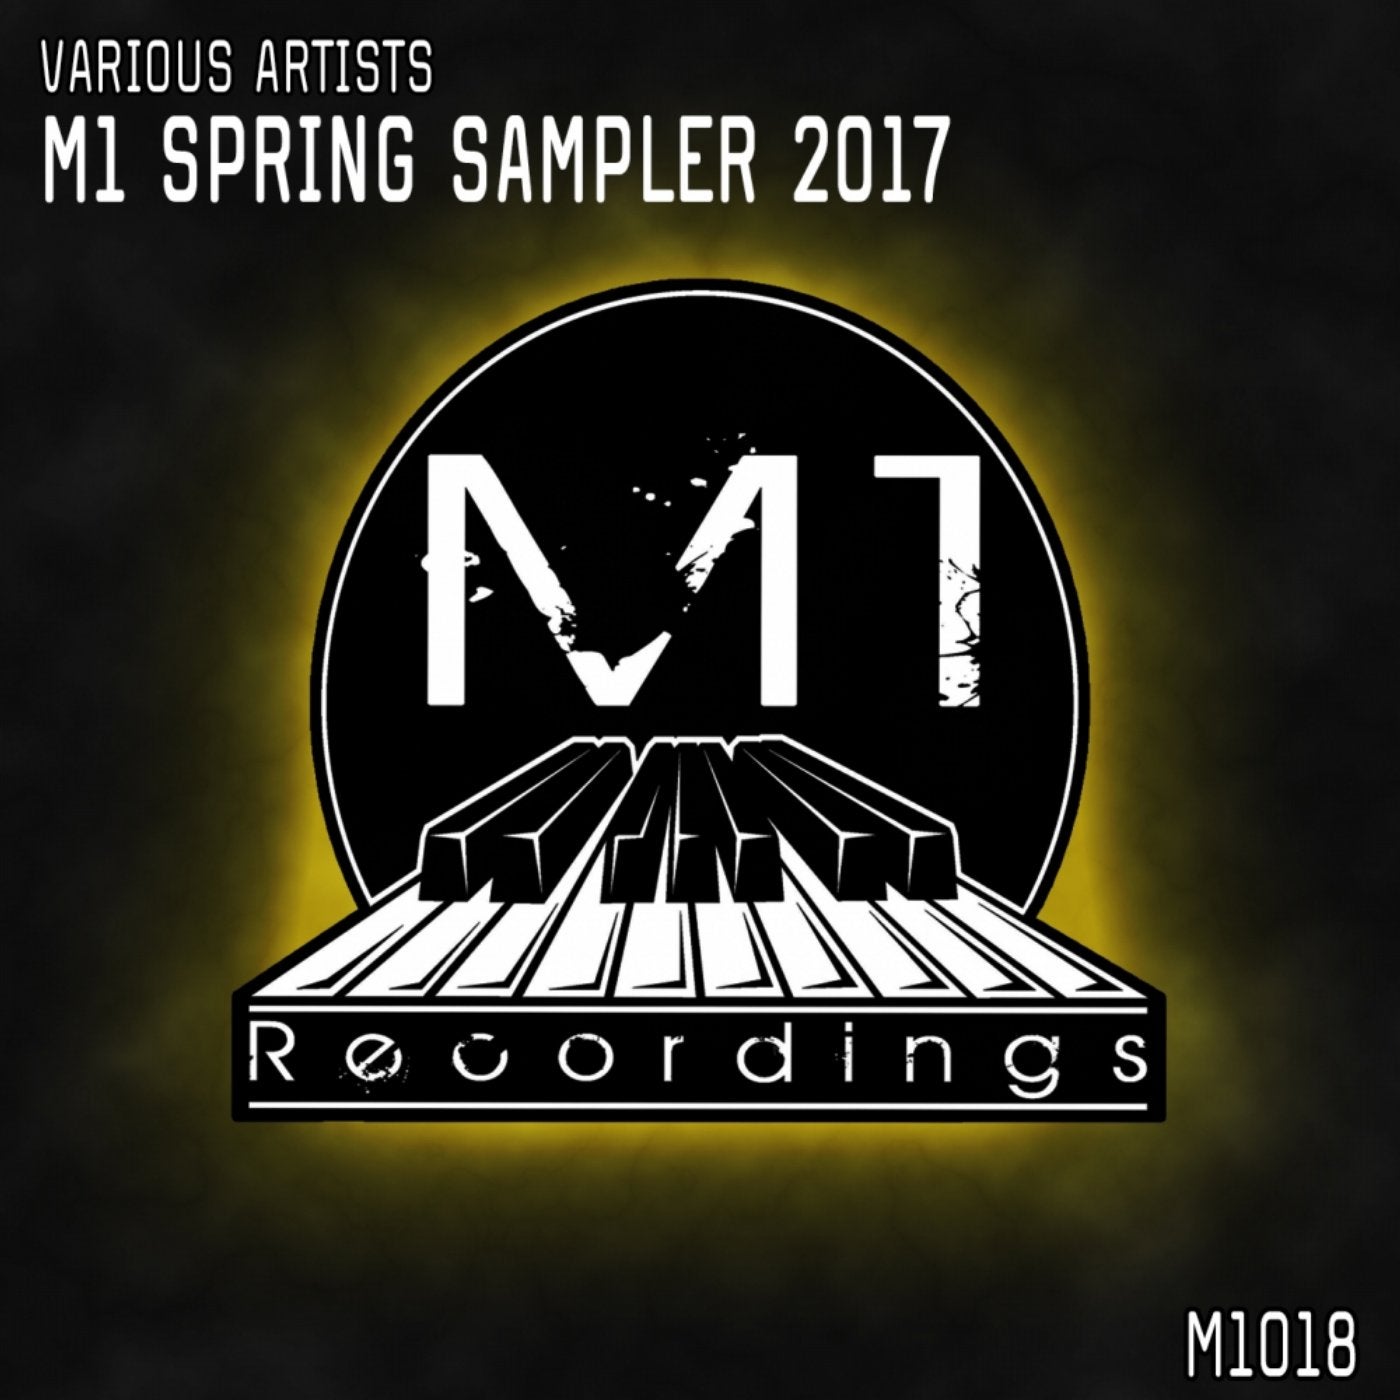 M1 Spring Sampler 2017